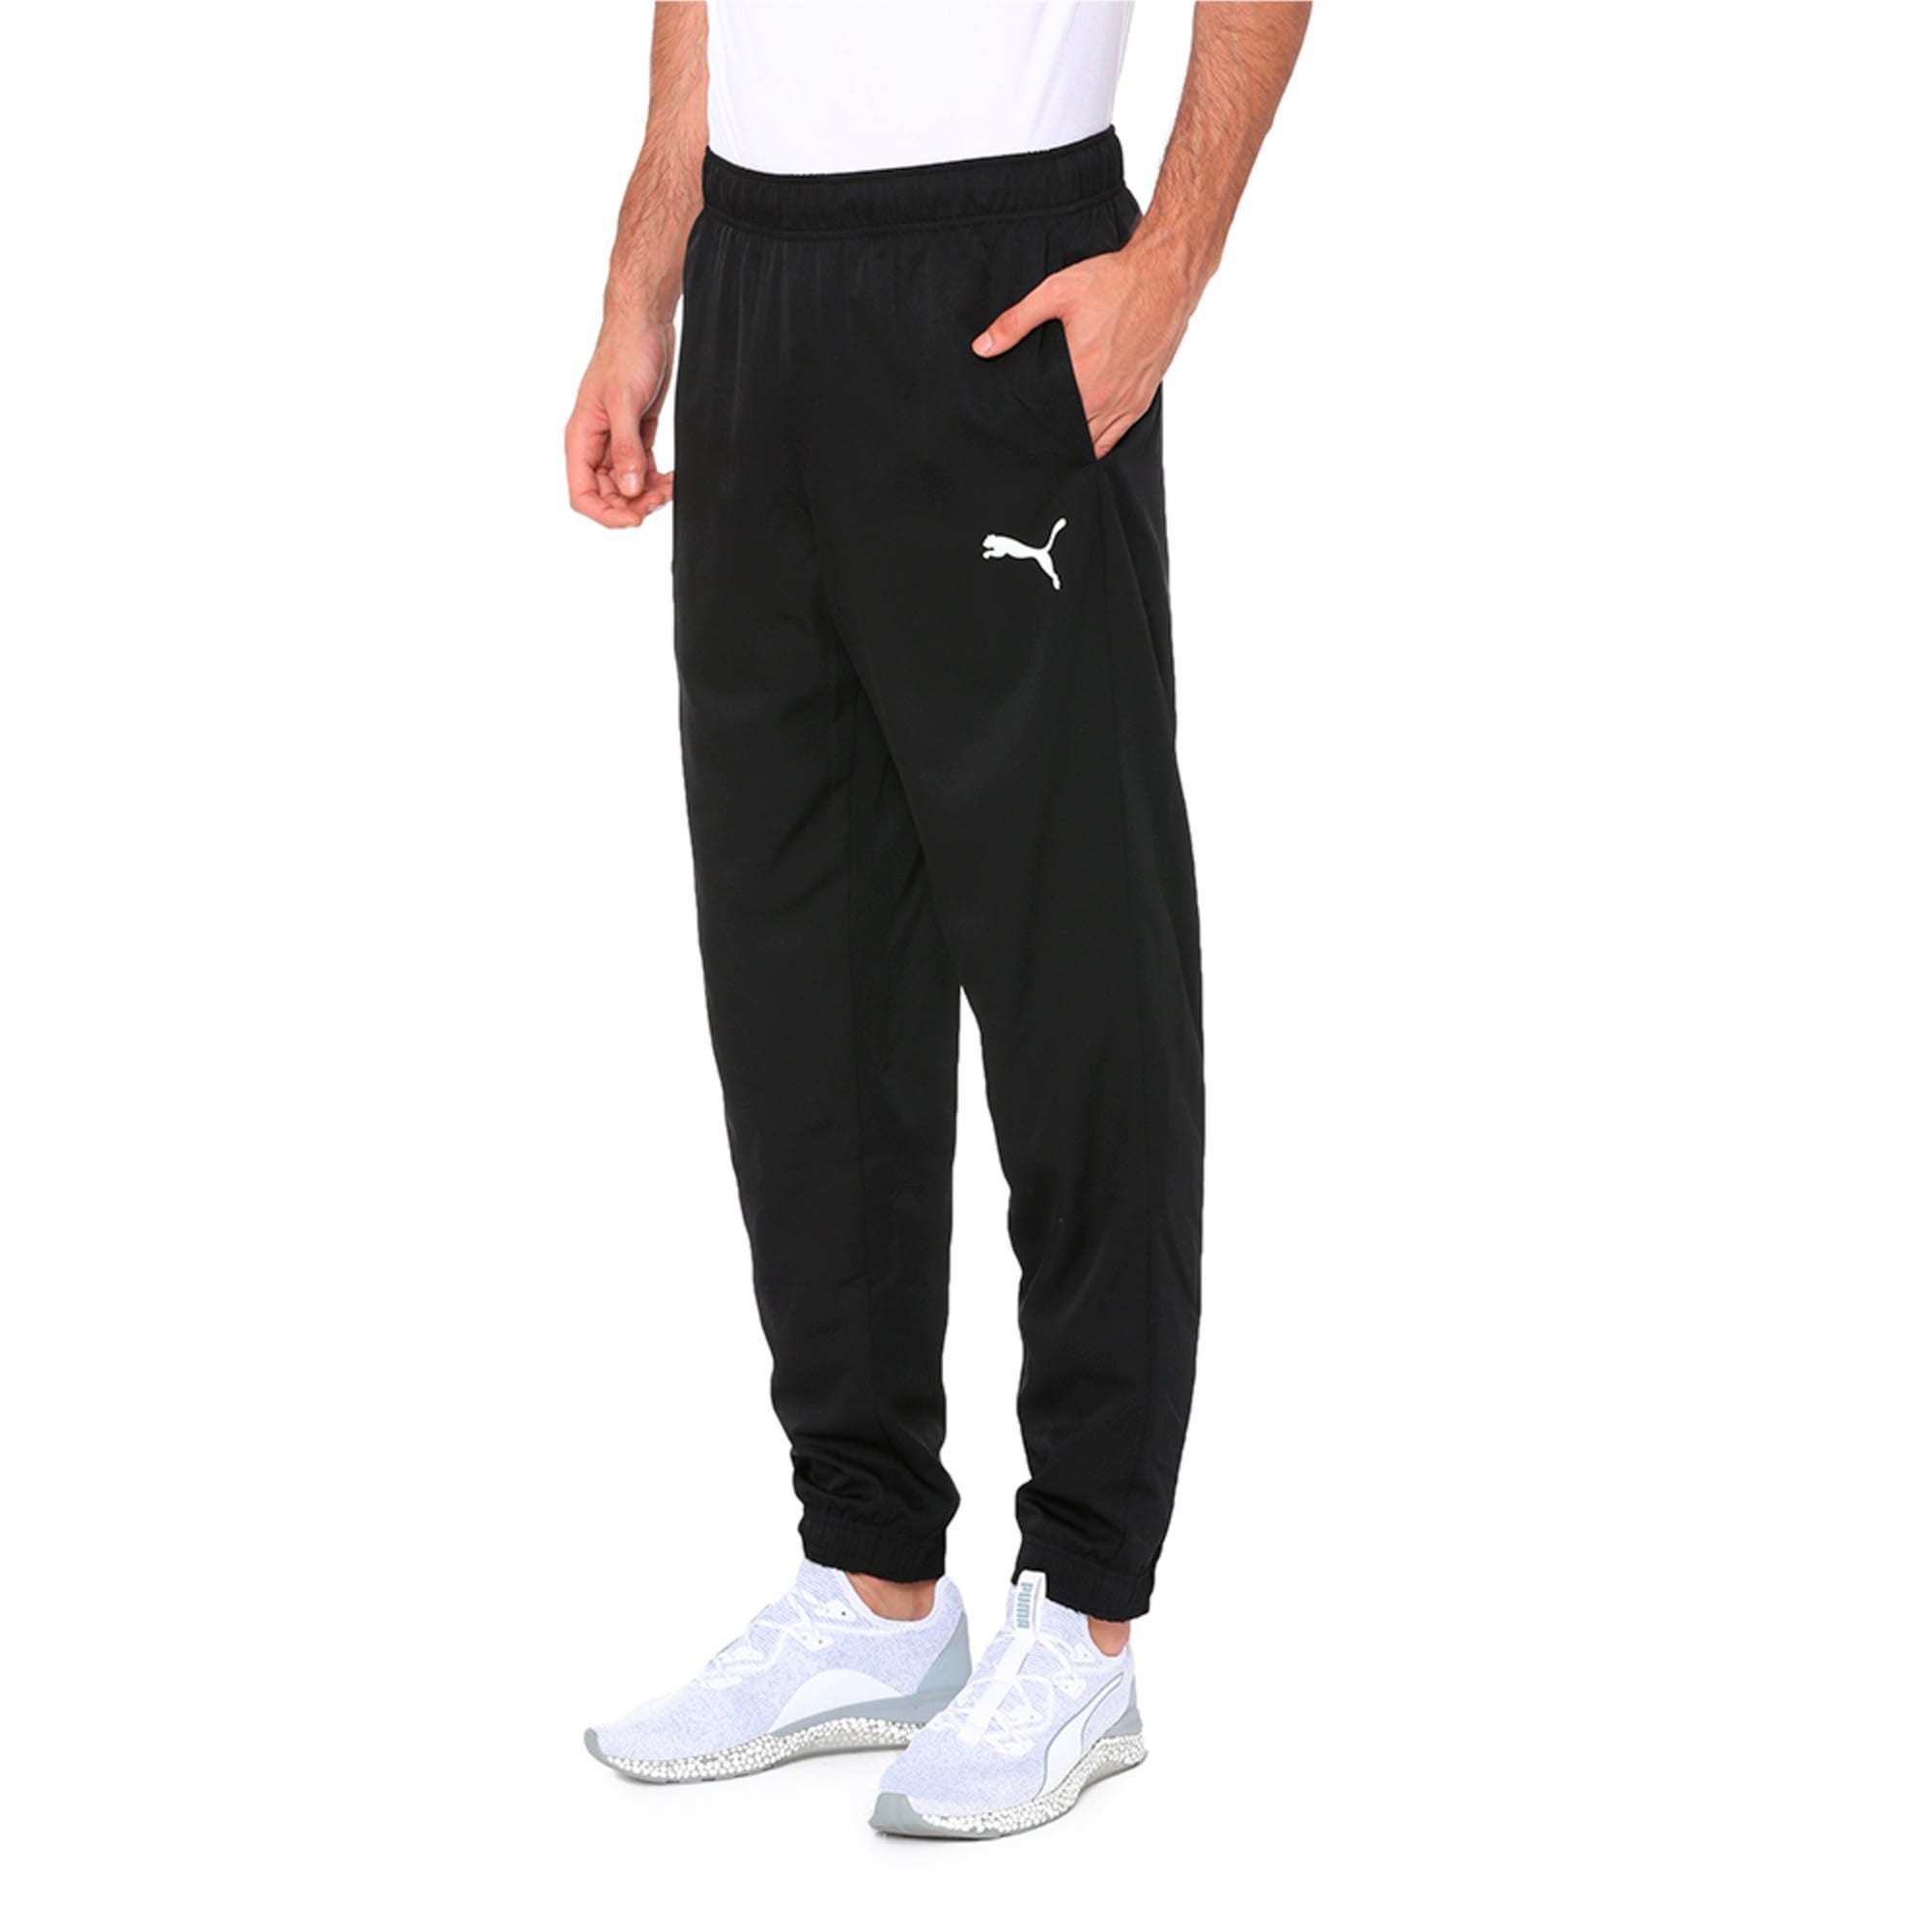 Quần Dài Chính Hãng - Puma Active Woven Men's Sweatpants 'Black' - 851707-01